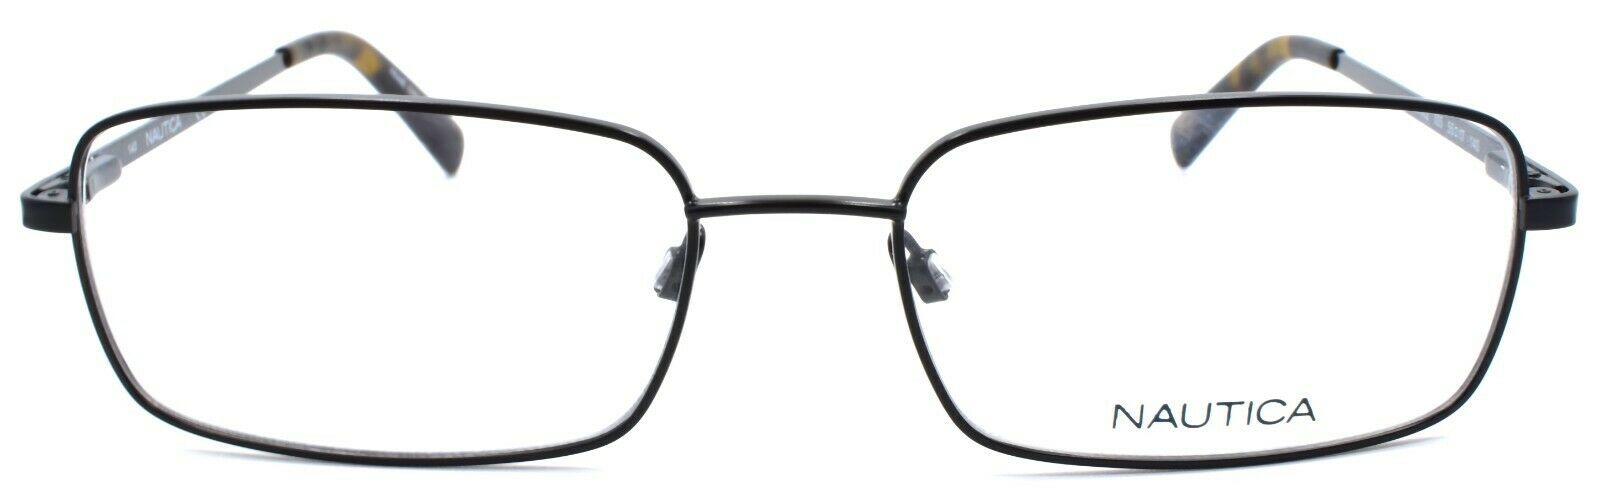 2-Nautica N7302 005 Men's Eyeglasses Frames 55-18-140 Satin Black-688940463187-IKSpecs